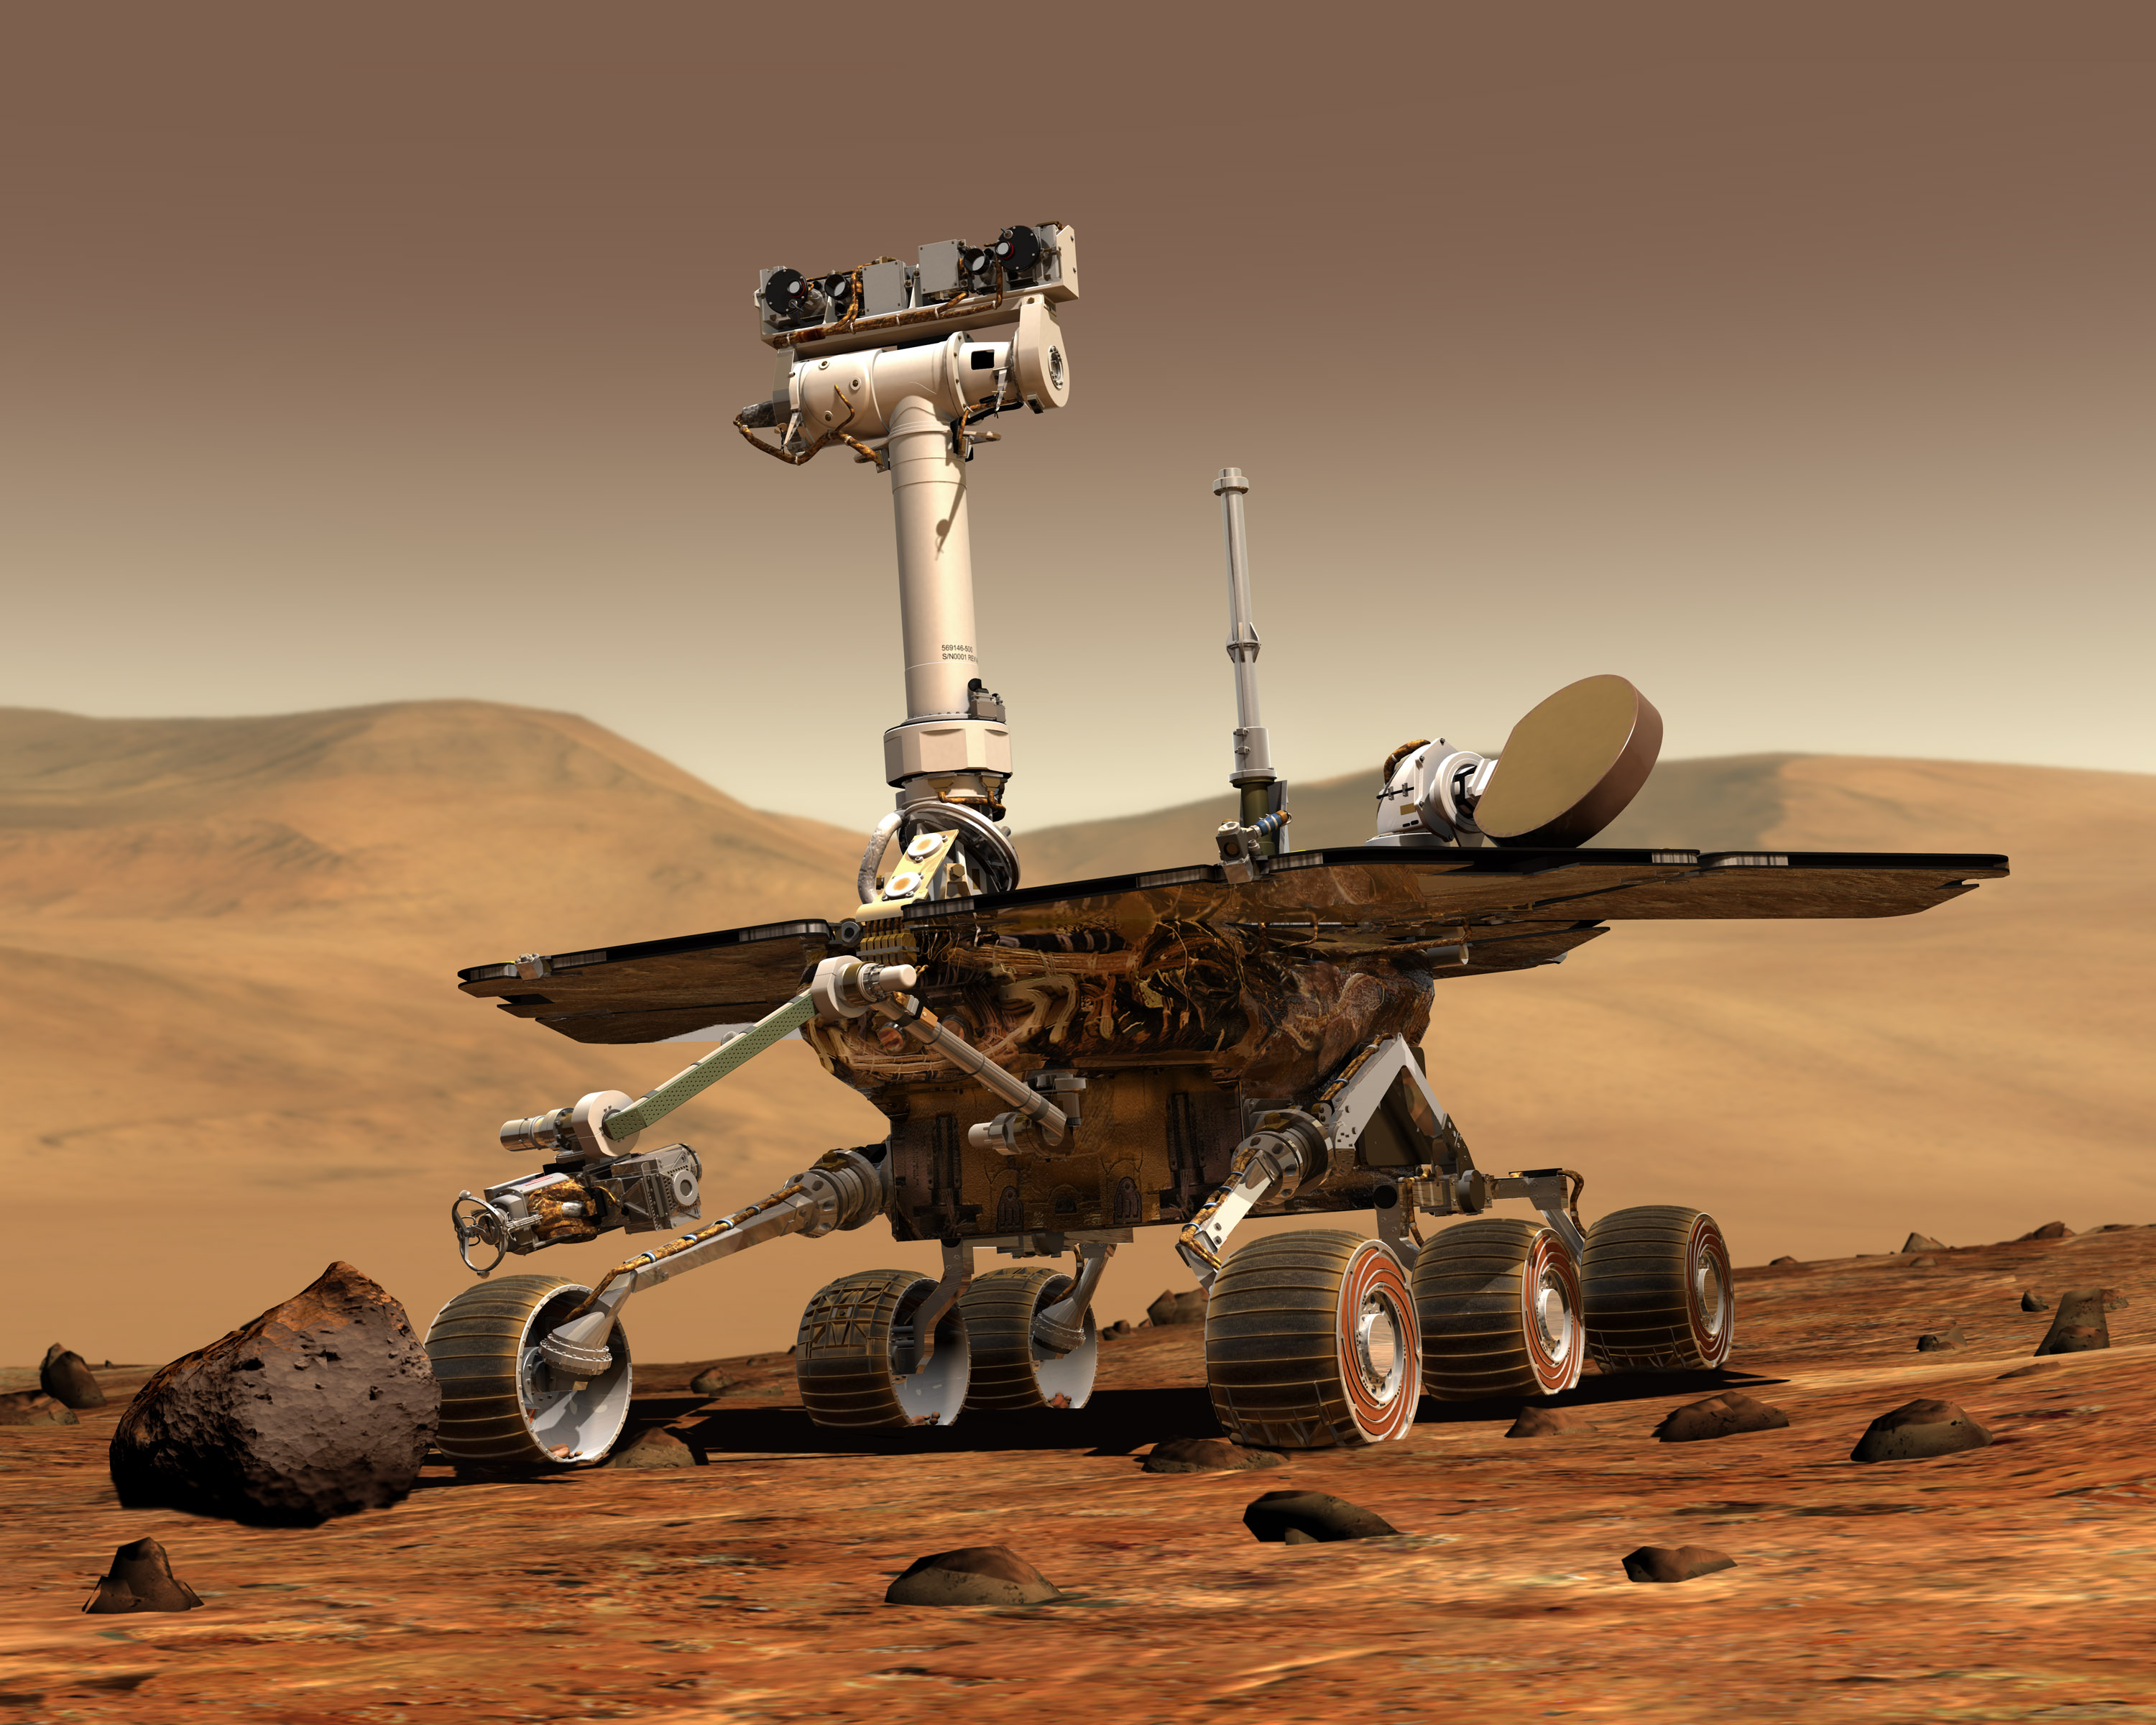 The NASA Mars Rover.